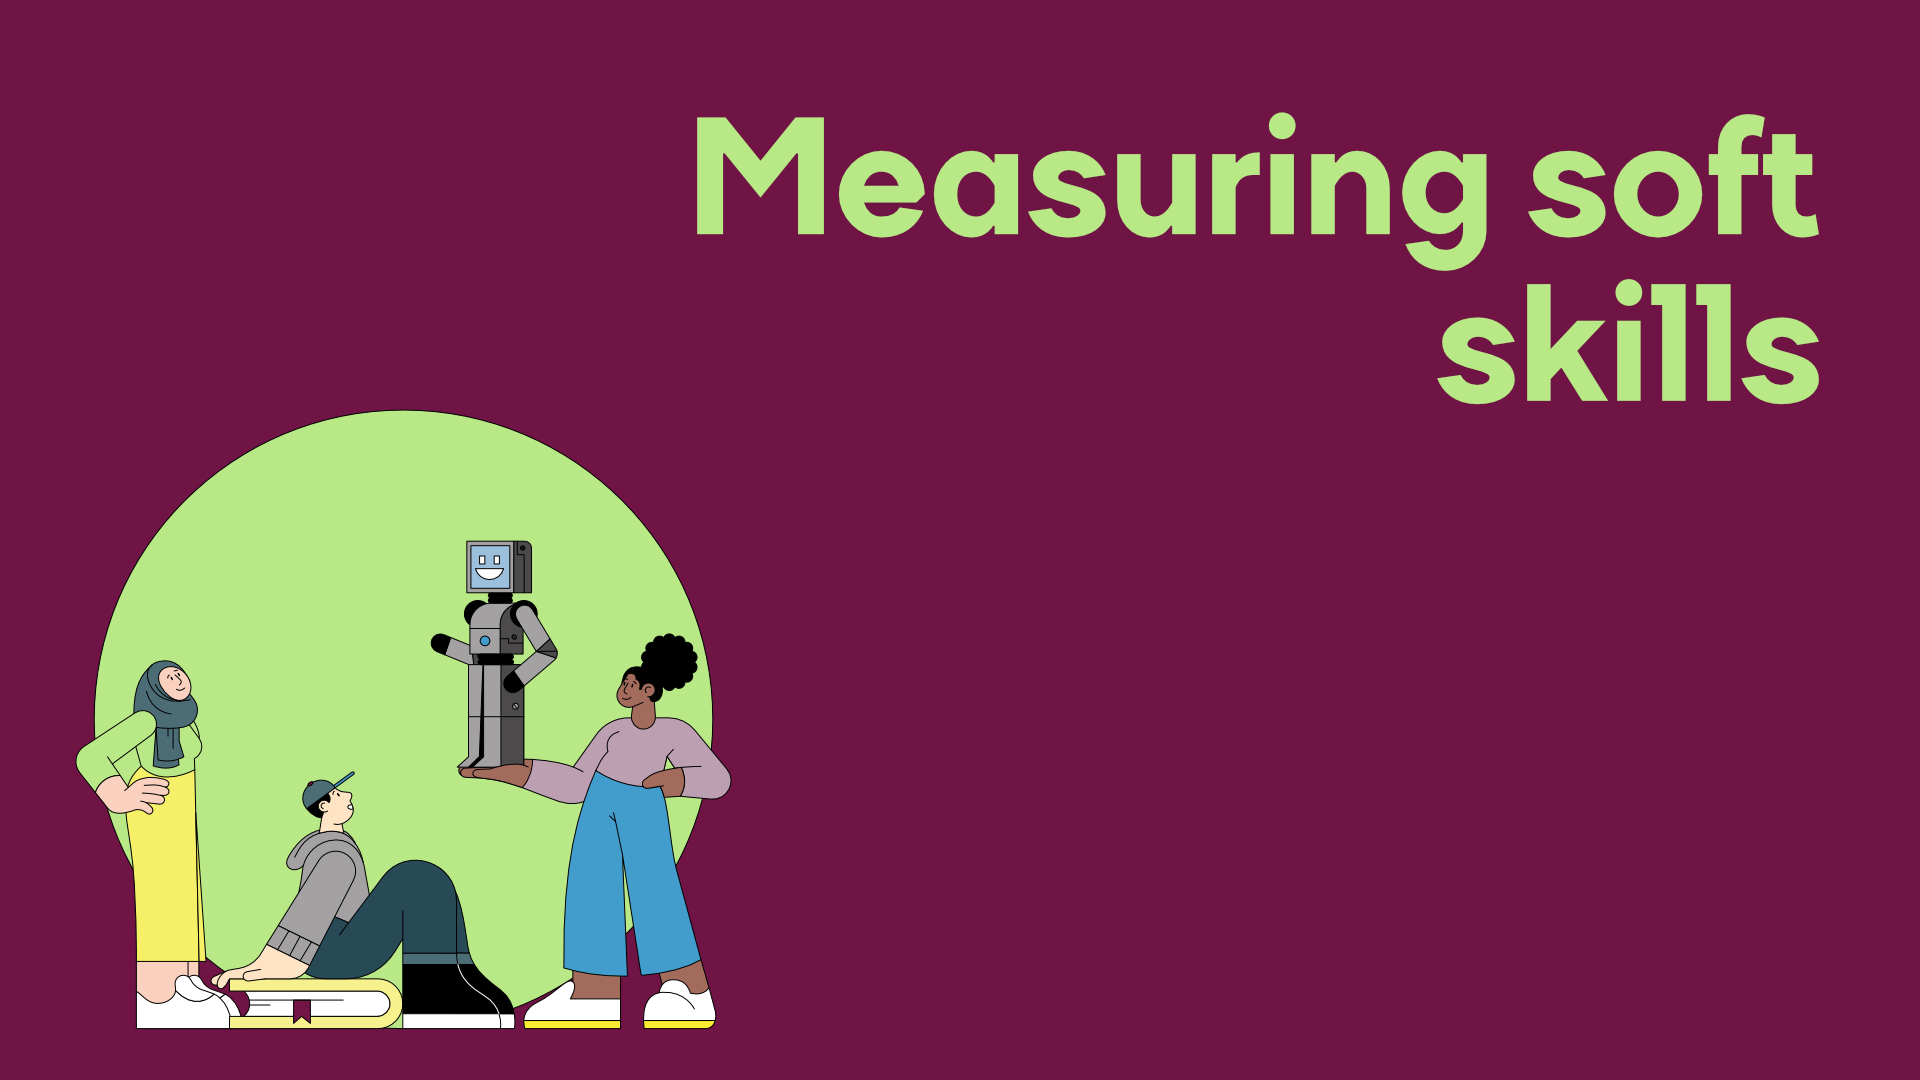 Measuring soft skills - how to measure soft skills